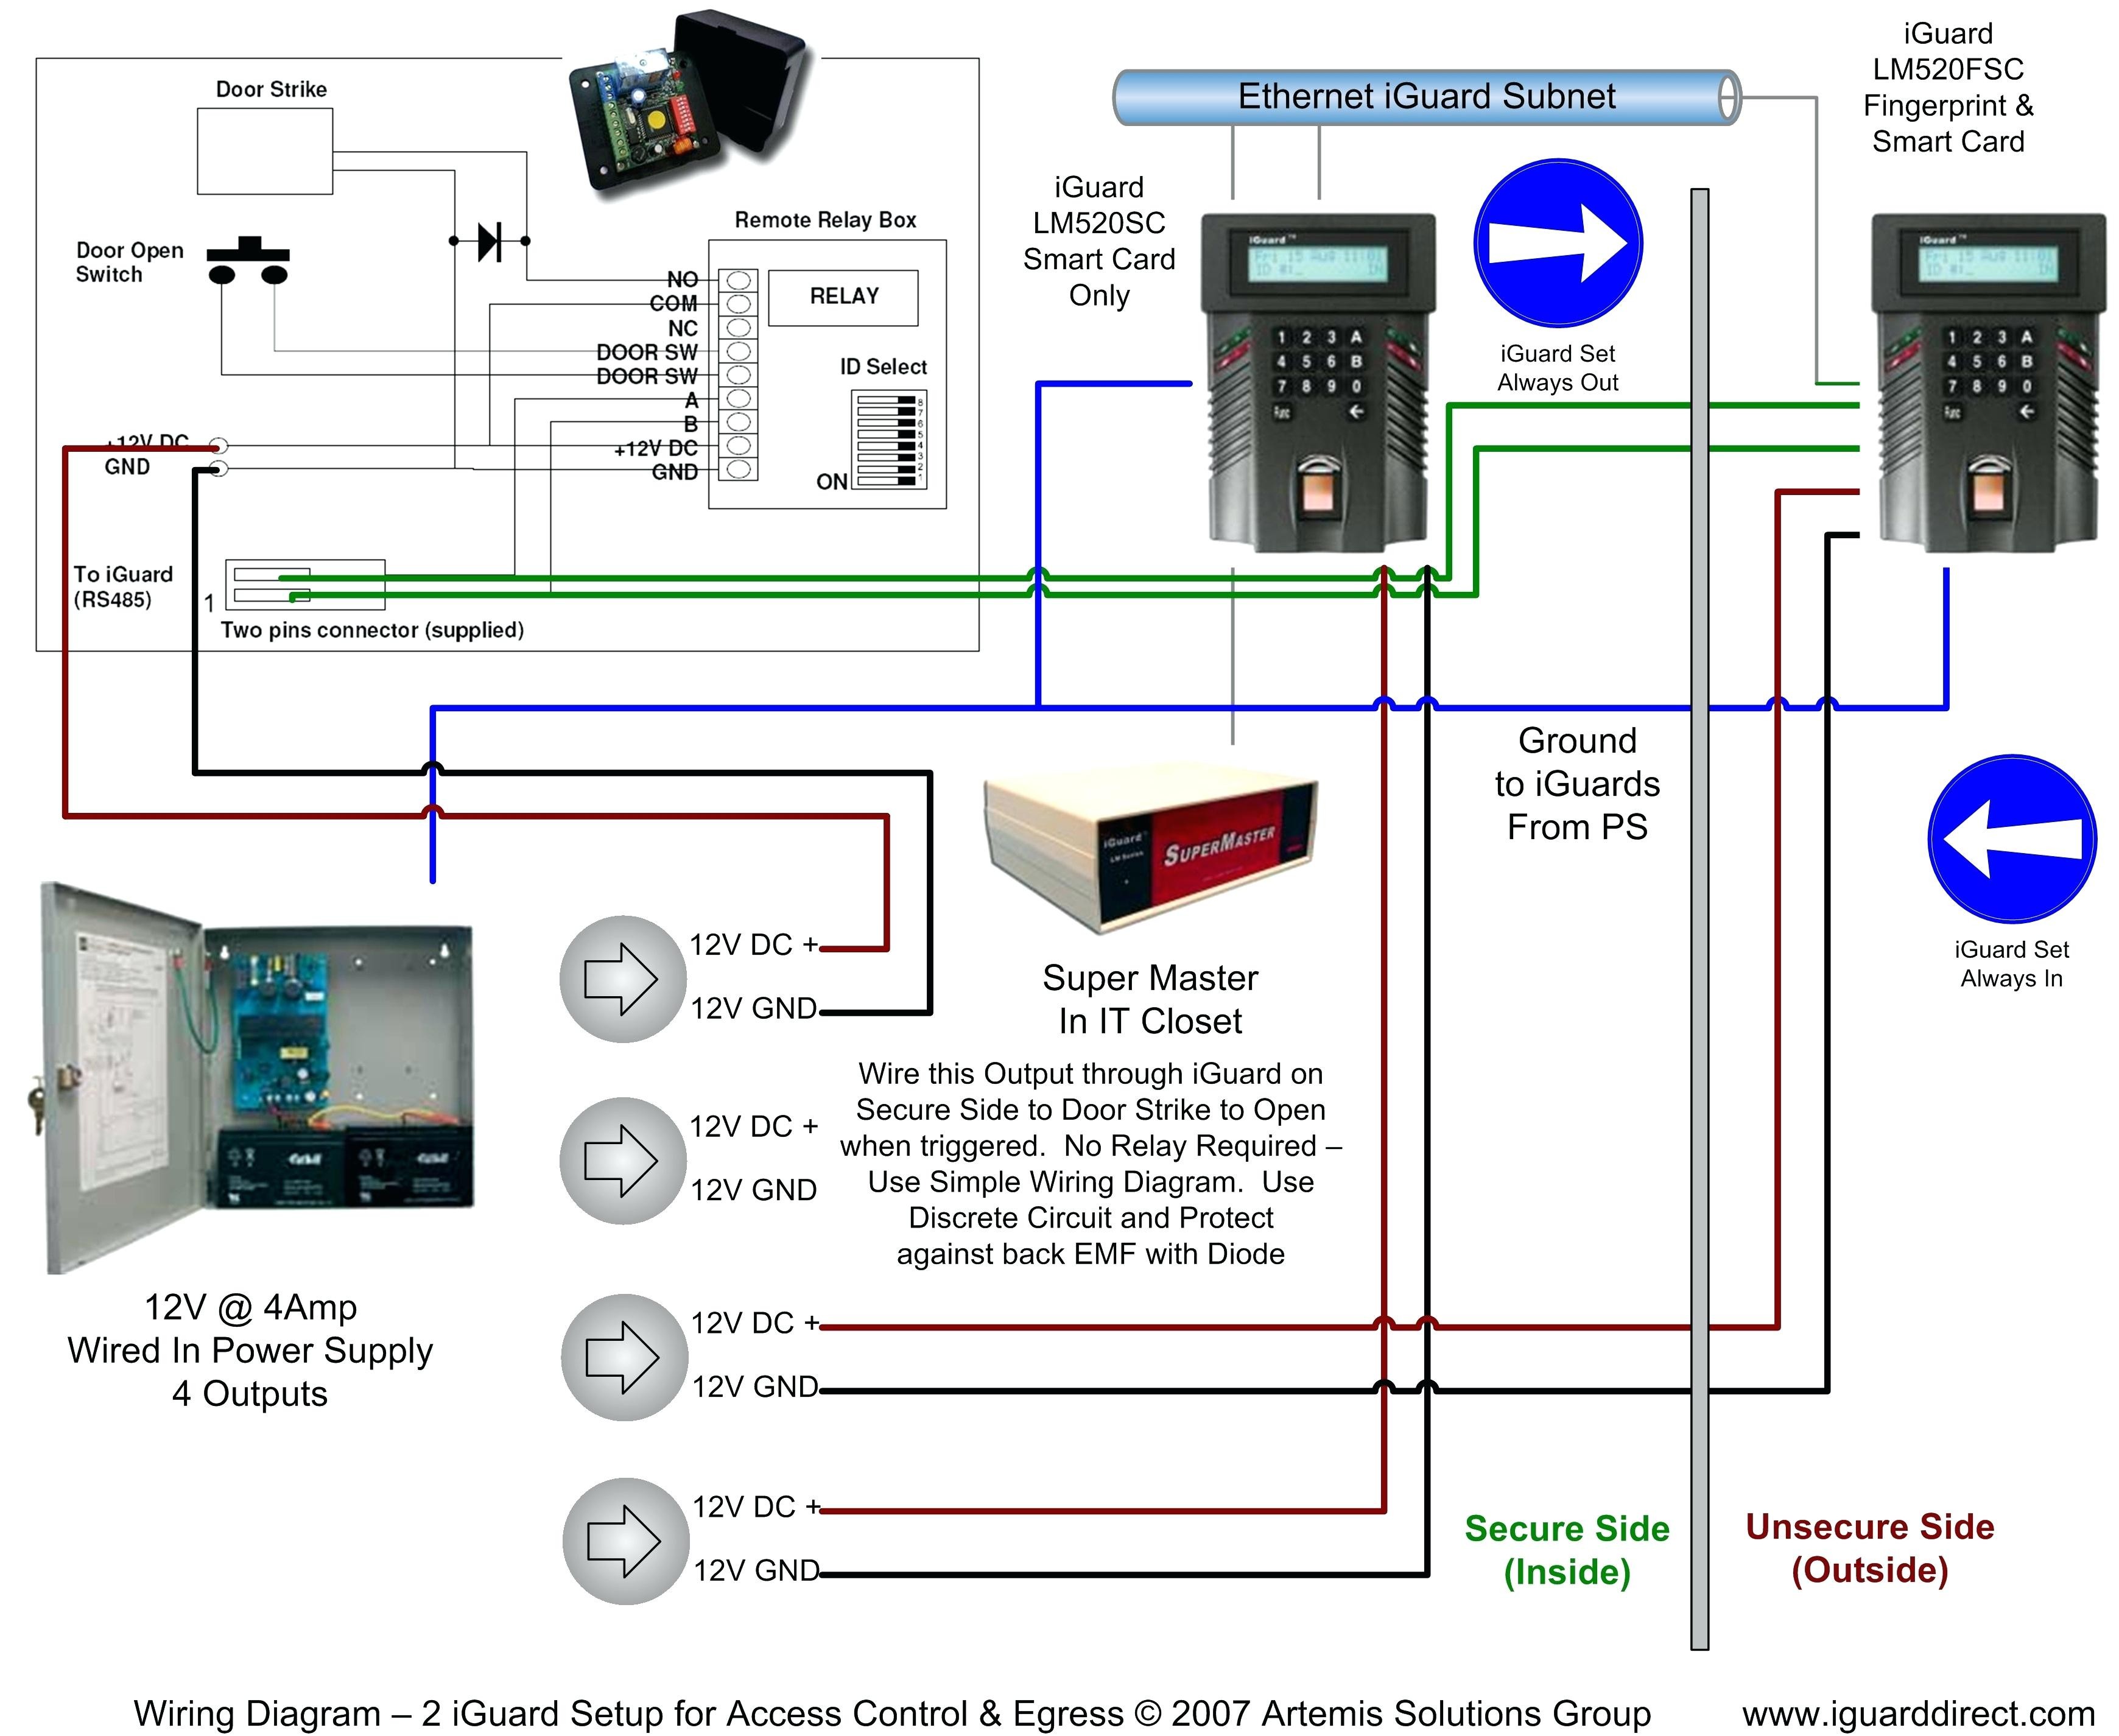 Lenel 1320 Wiring Diagram / Lenel Wiring Diagram Panasonic Cd Player